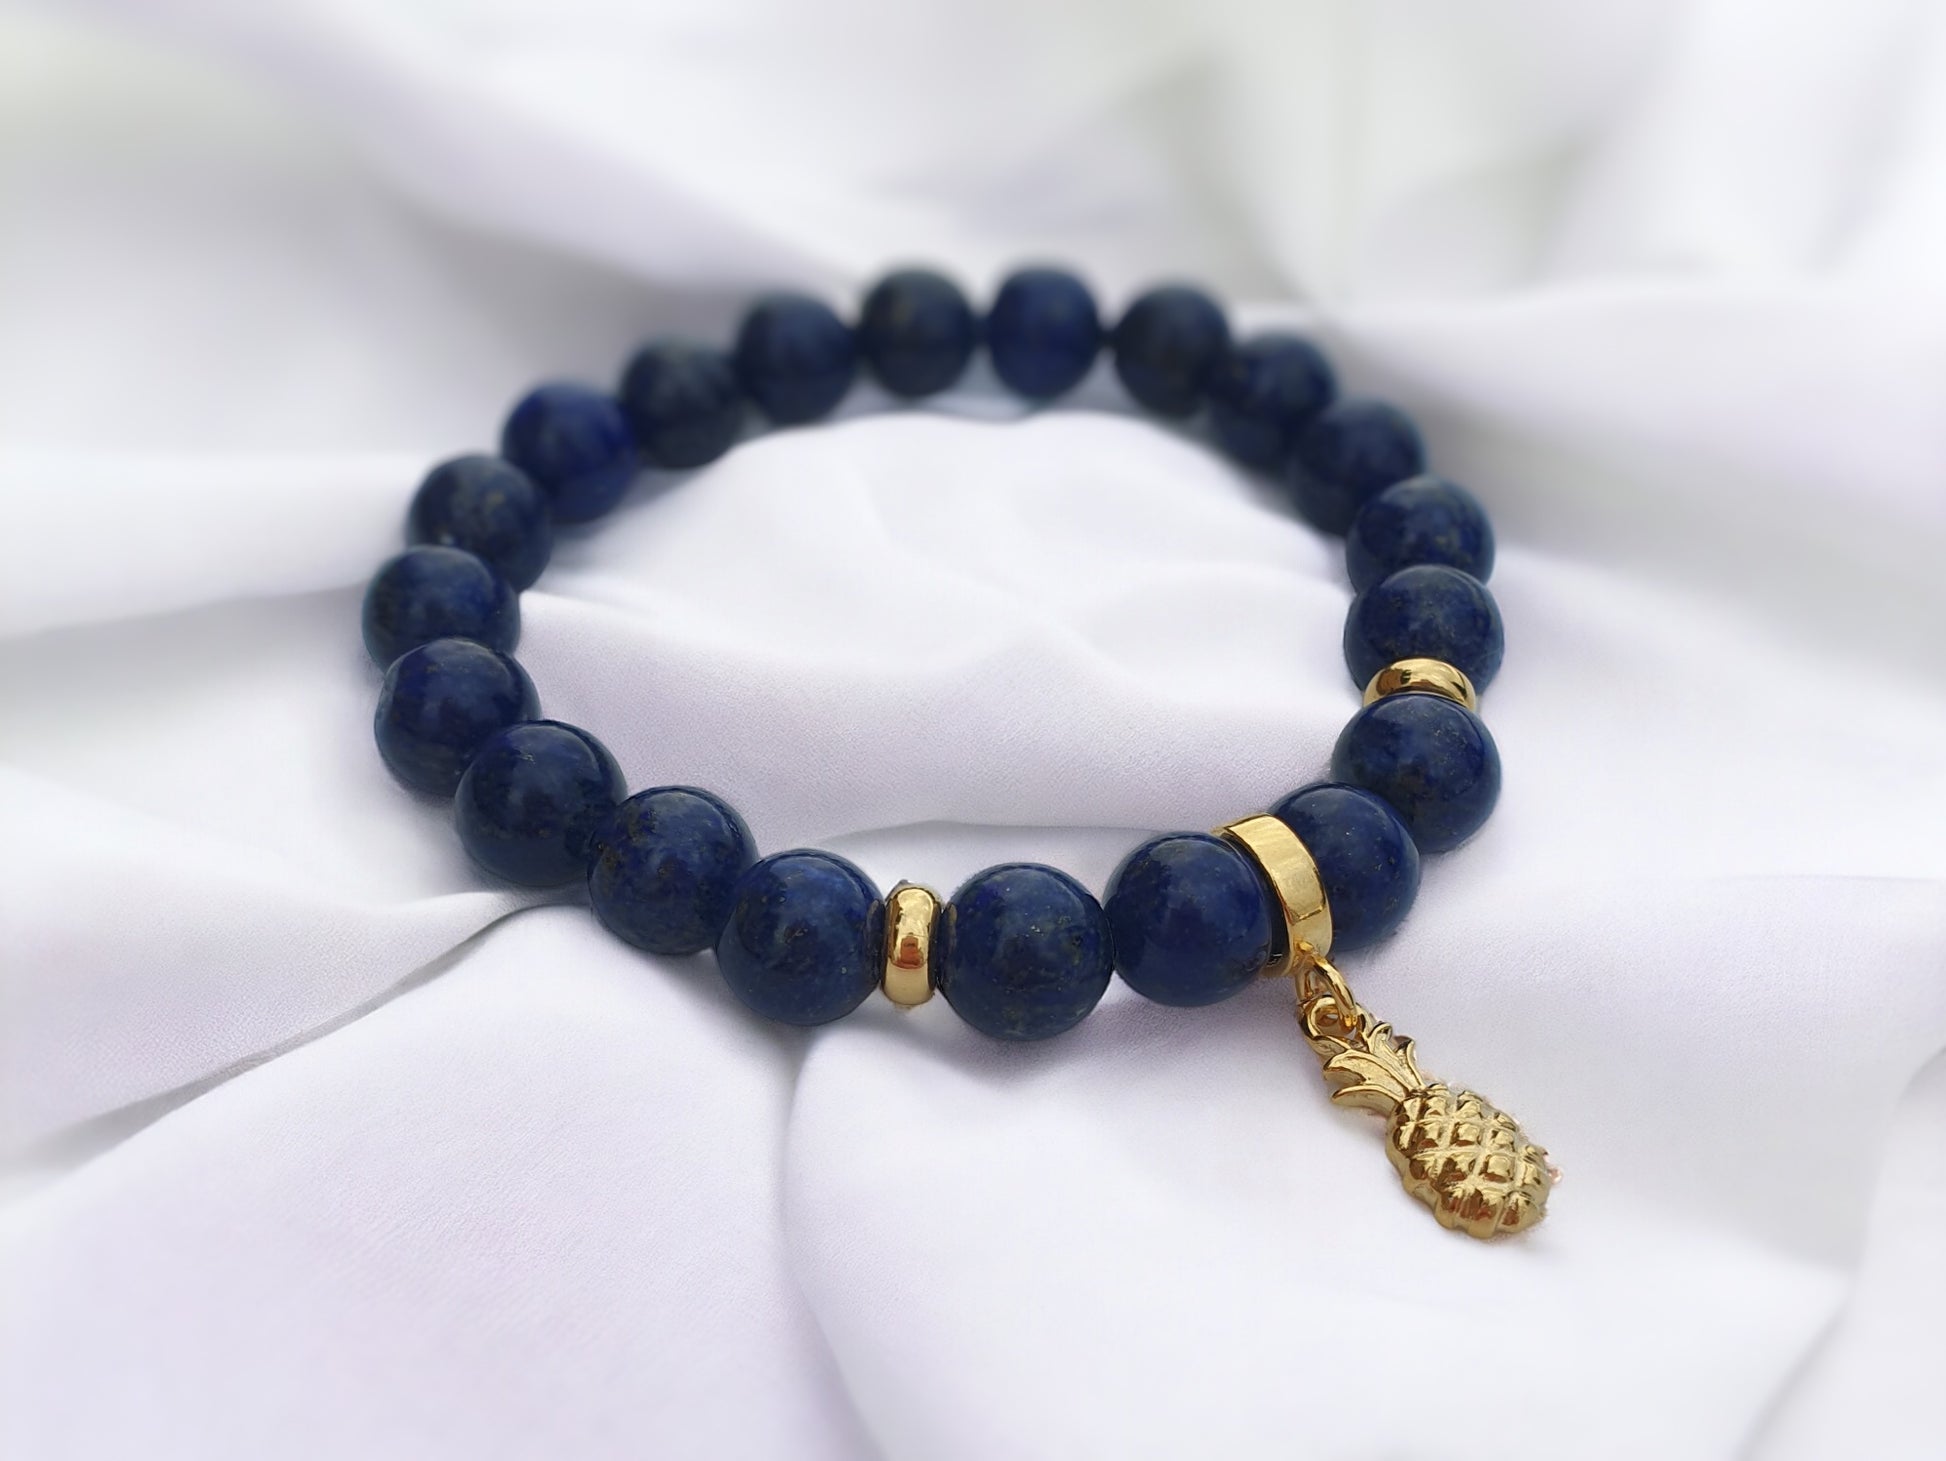 Fashion stretchy women bracelet with 8mm lapis lazuli stones